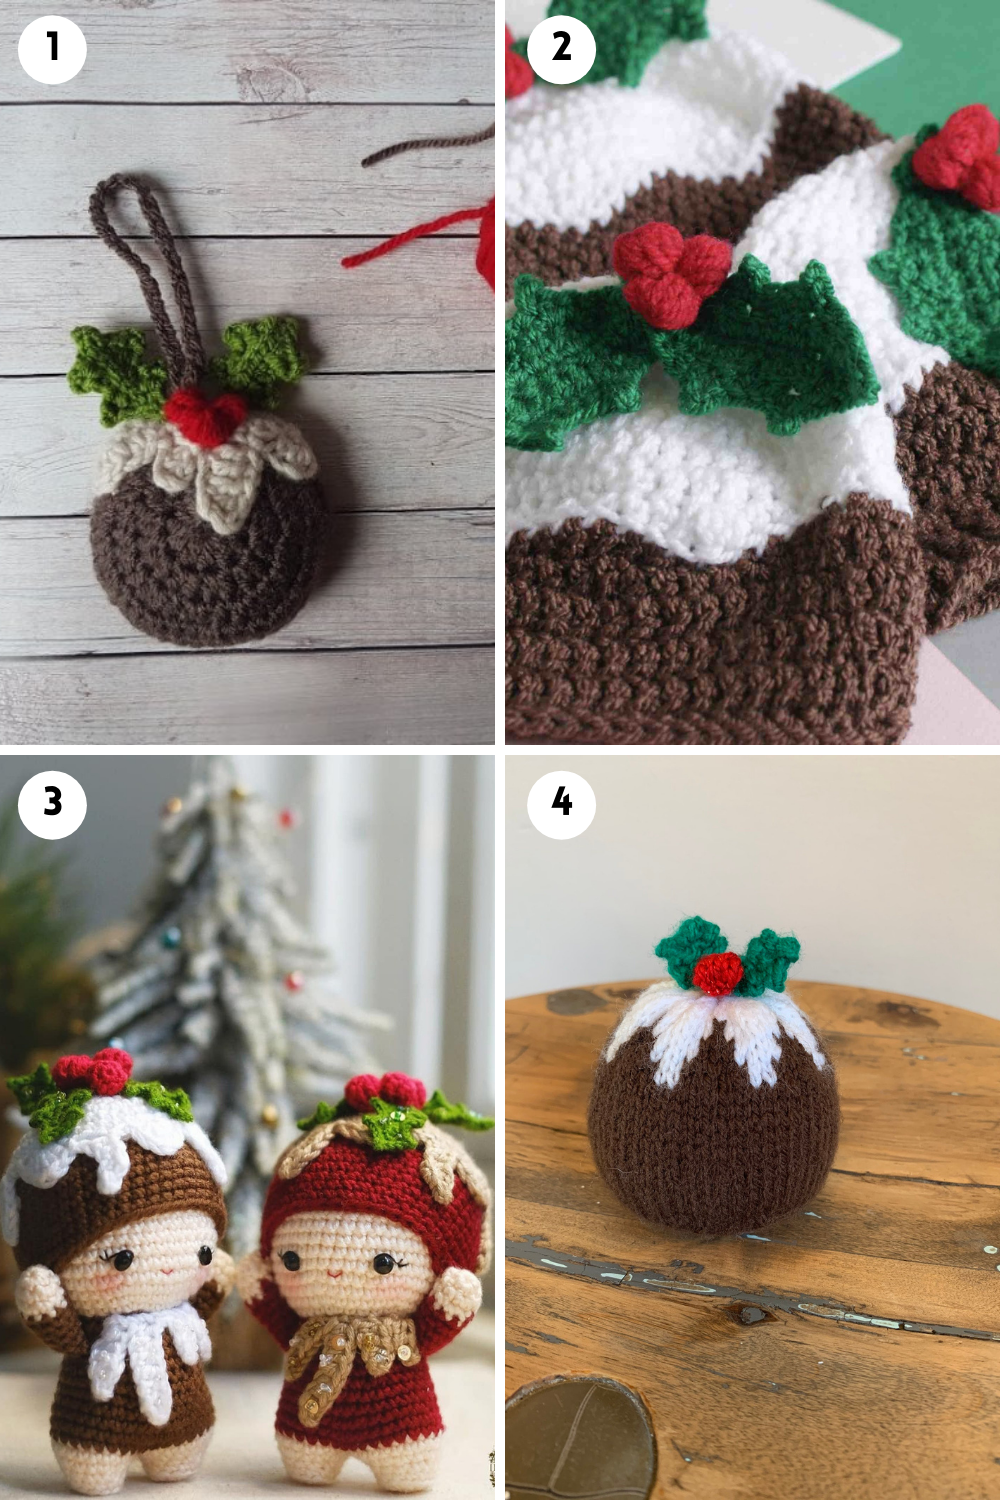 Crochet Christmas Pudding Patterns